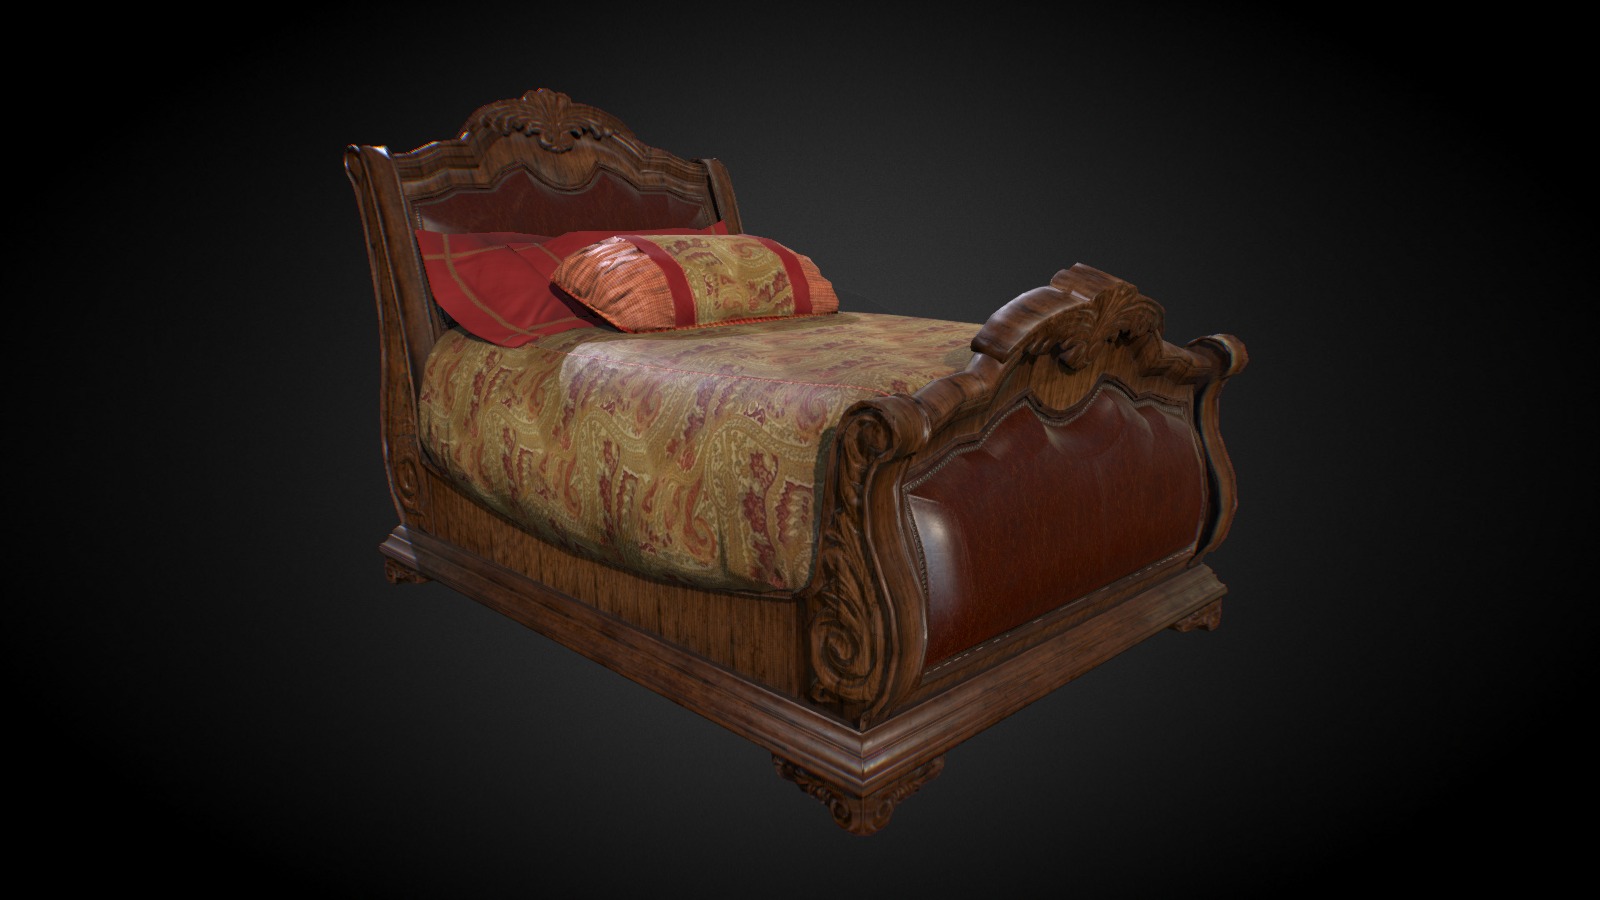 Classic bed Main Shape withn Level of Detail 0 with 13.536 Triangle Polygons - Classic bed MainShape (LOD 0: 13.536 Tris) - 3D model by johandark 3d model